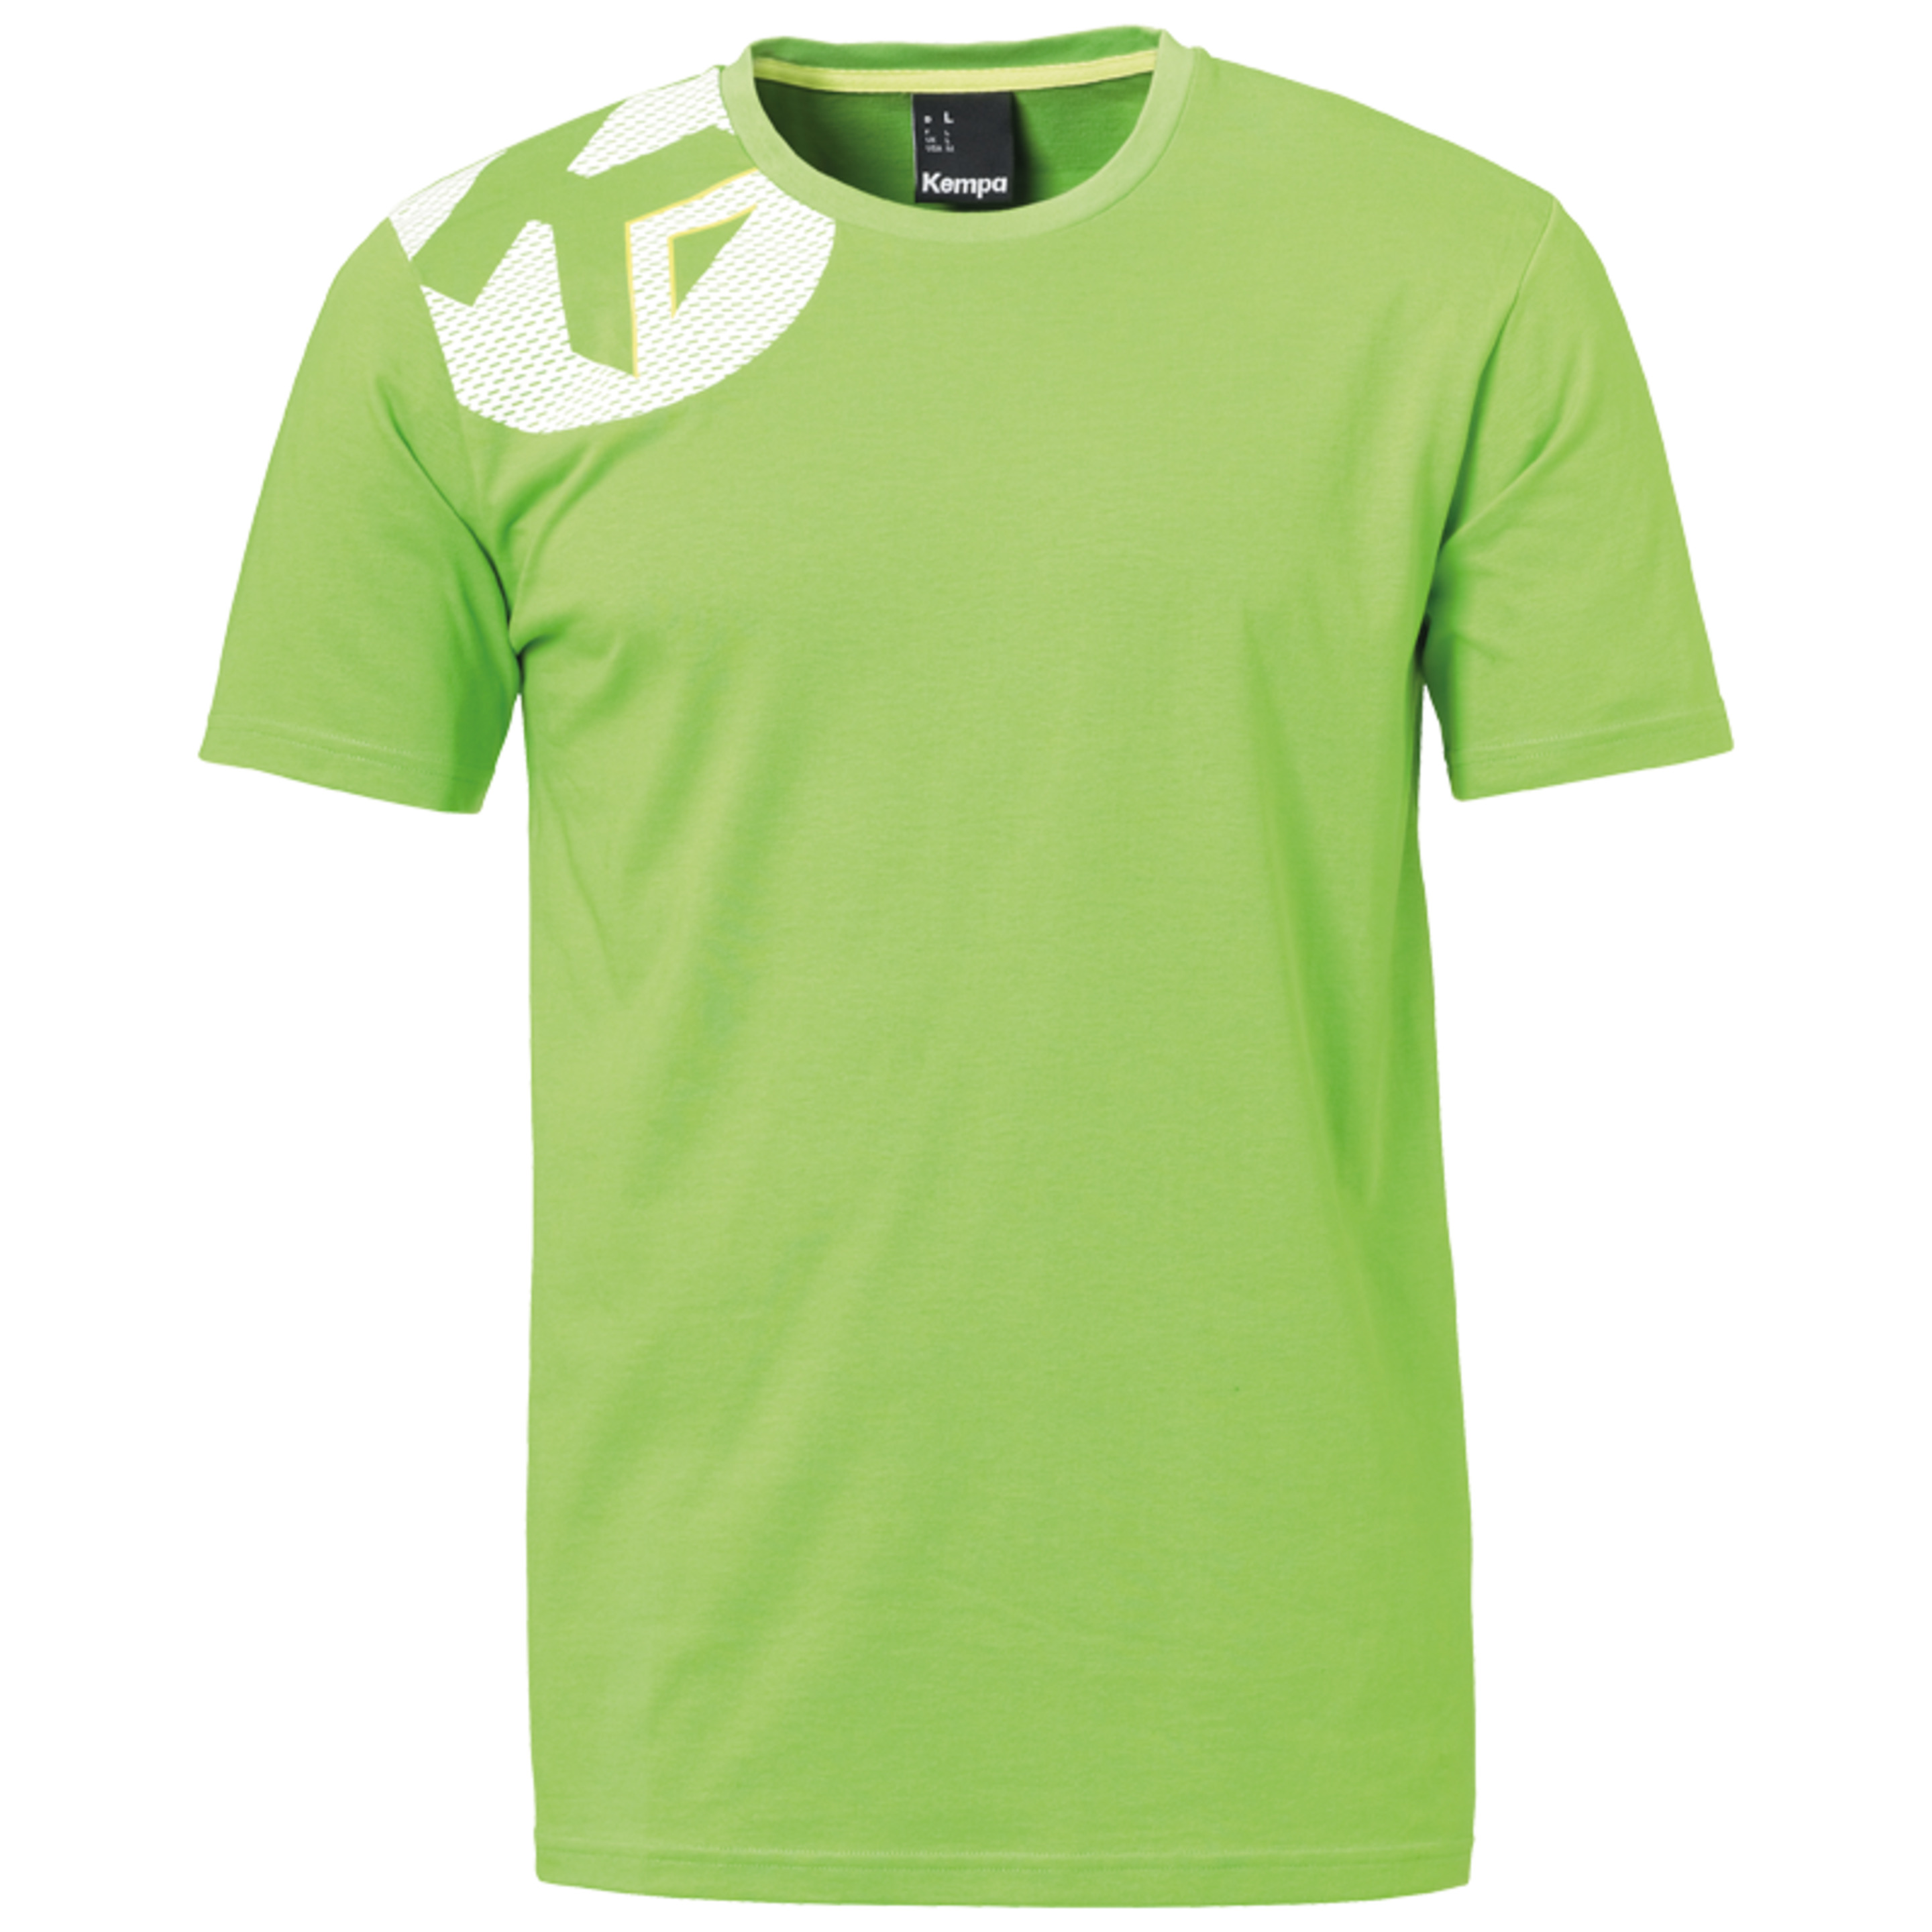 Camiseta Core 2.0 Kempa - verde - Camiseta Balonmano  MKP